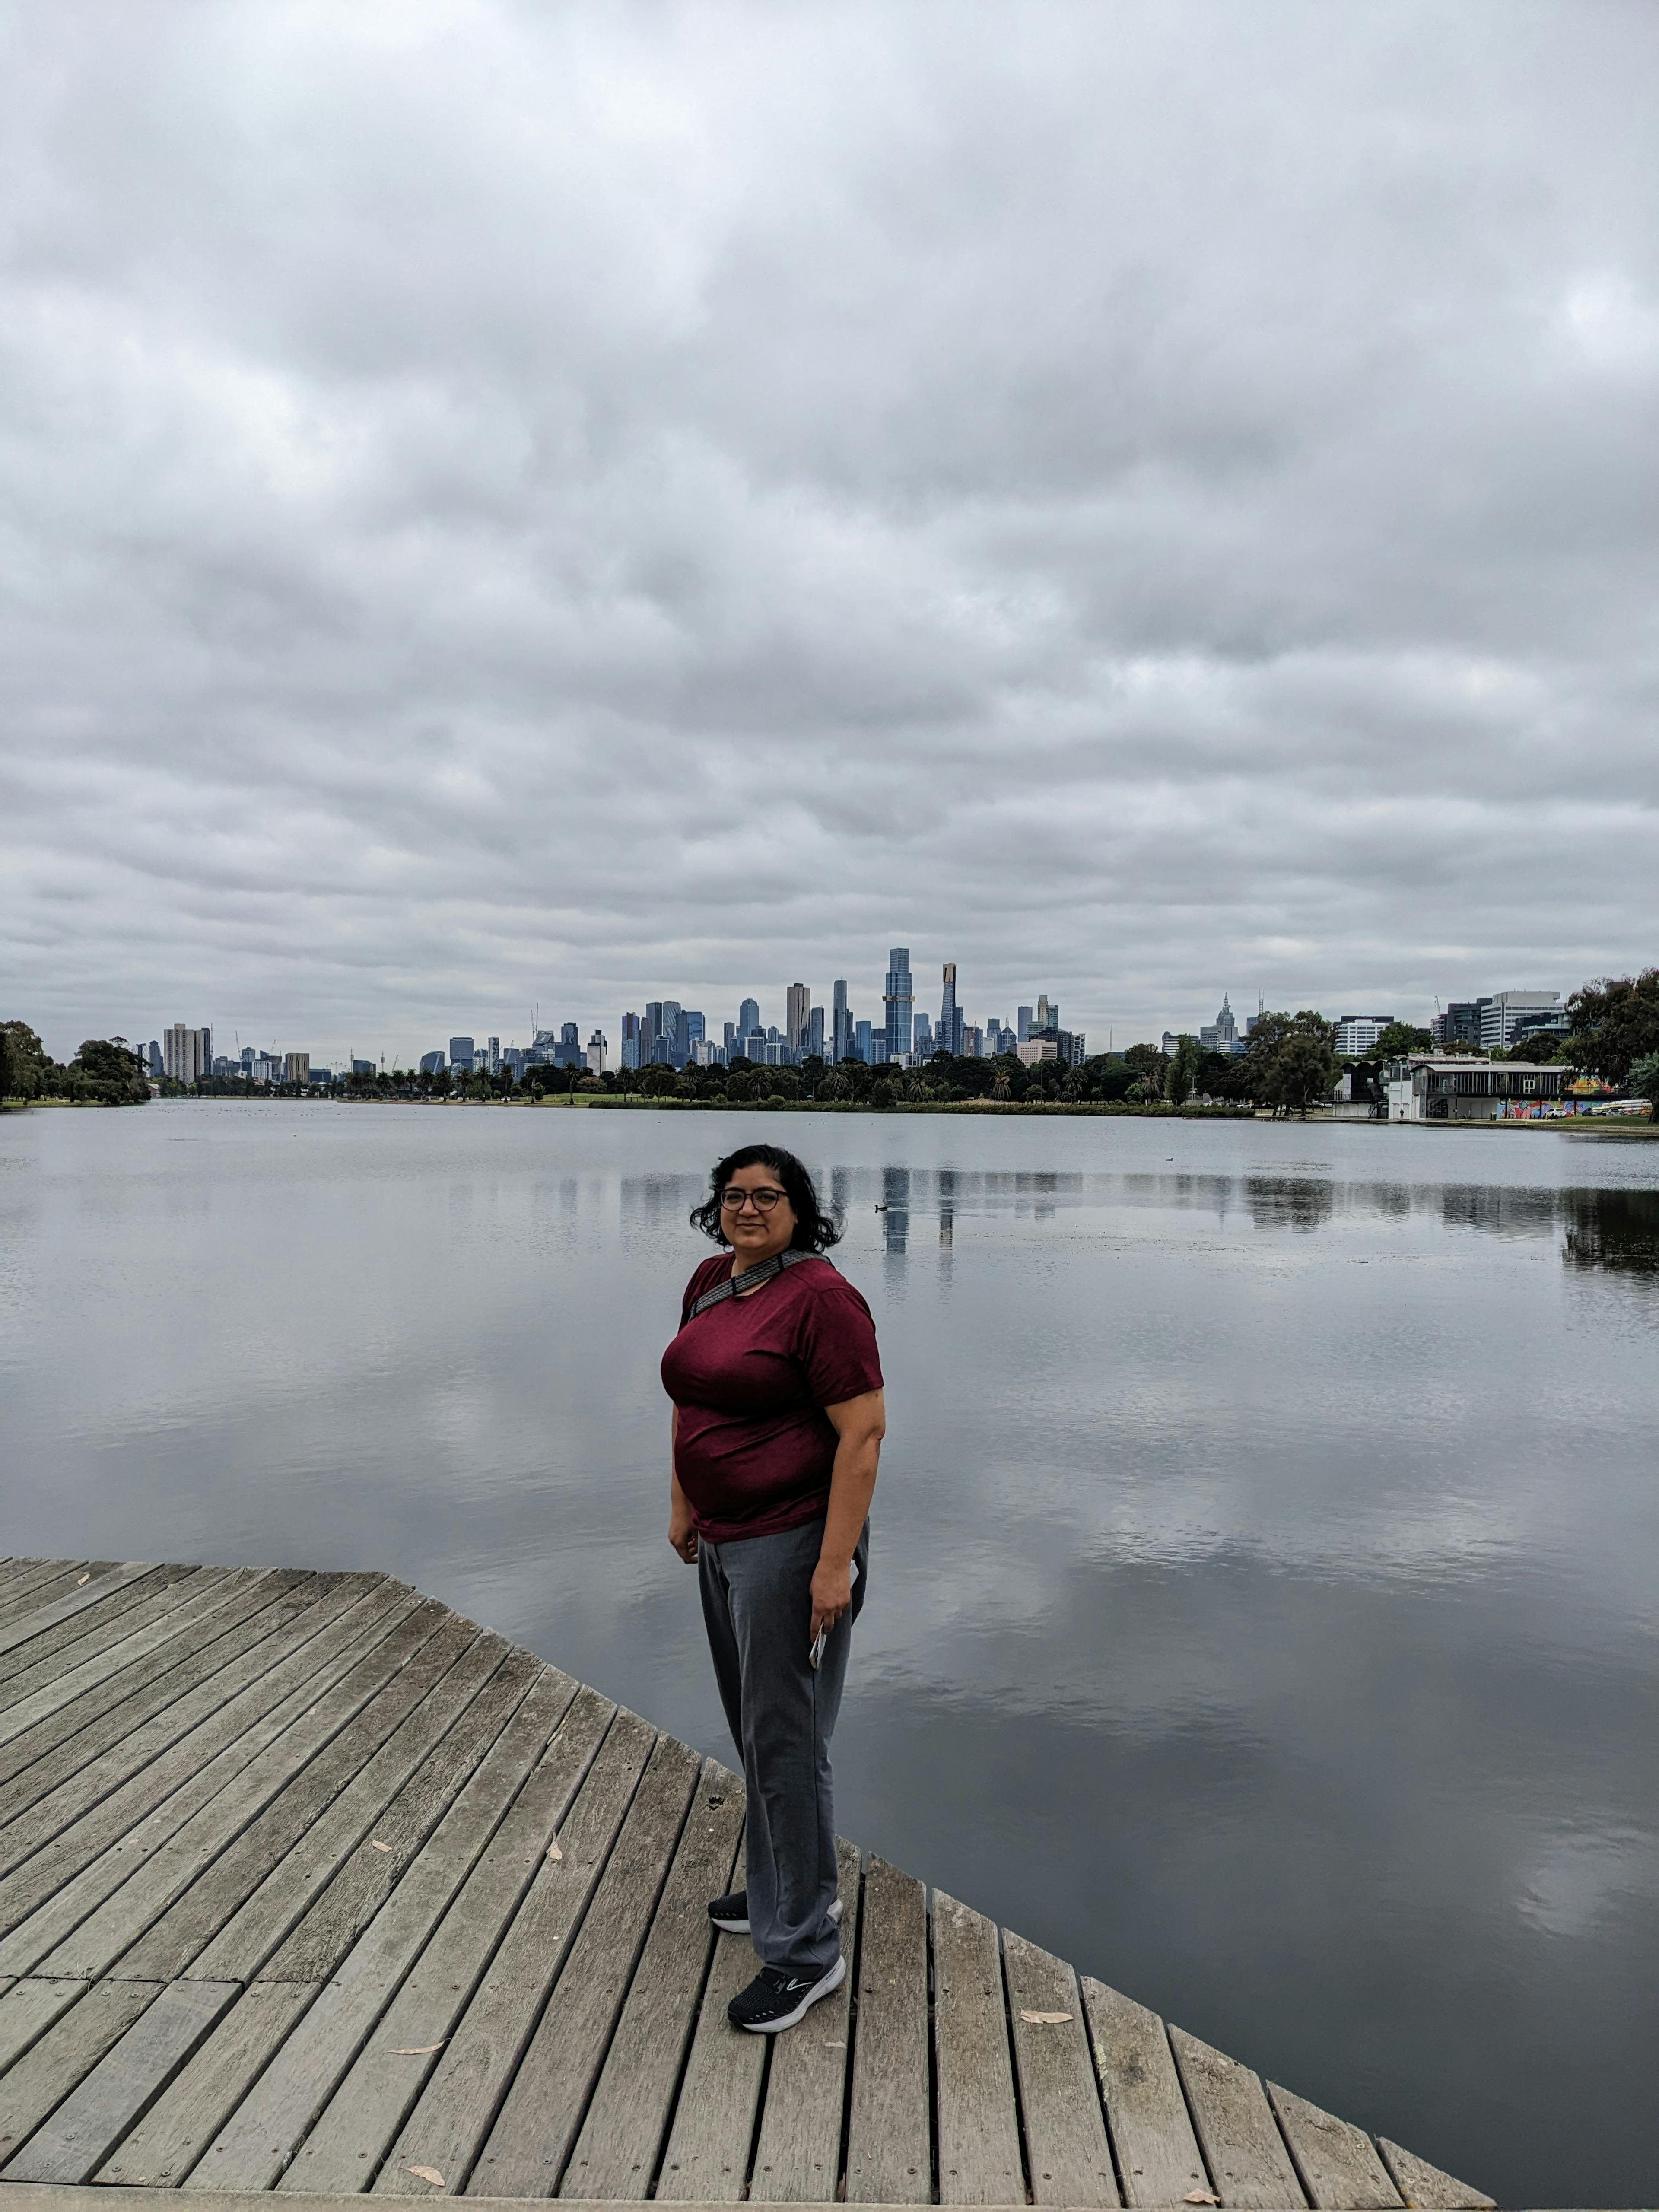 Me in Melbourne, Australia